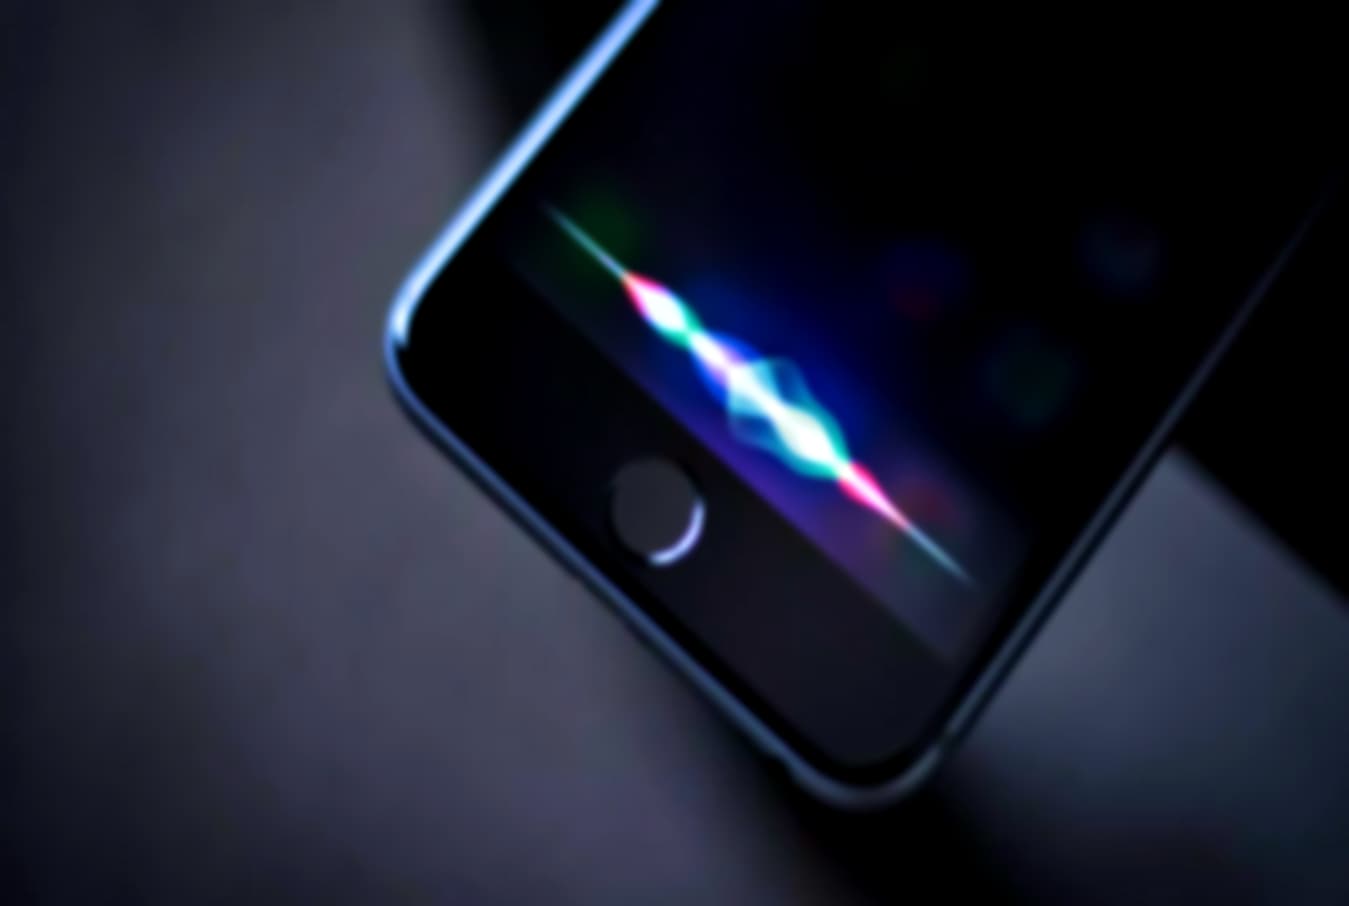 Whistleblower claims Apple listens to user conversions through Siri